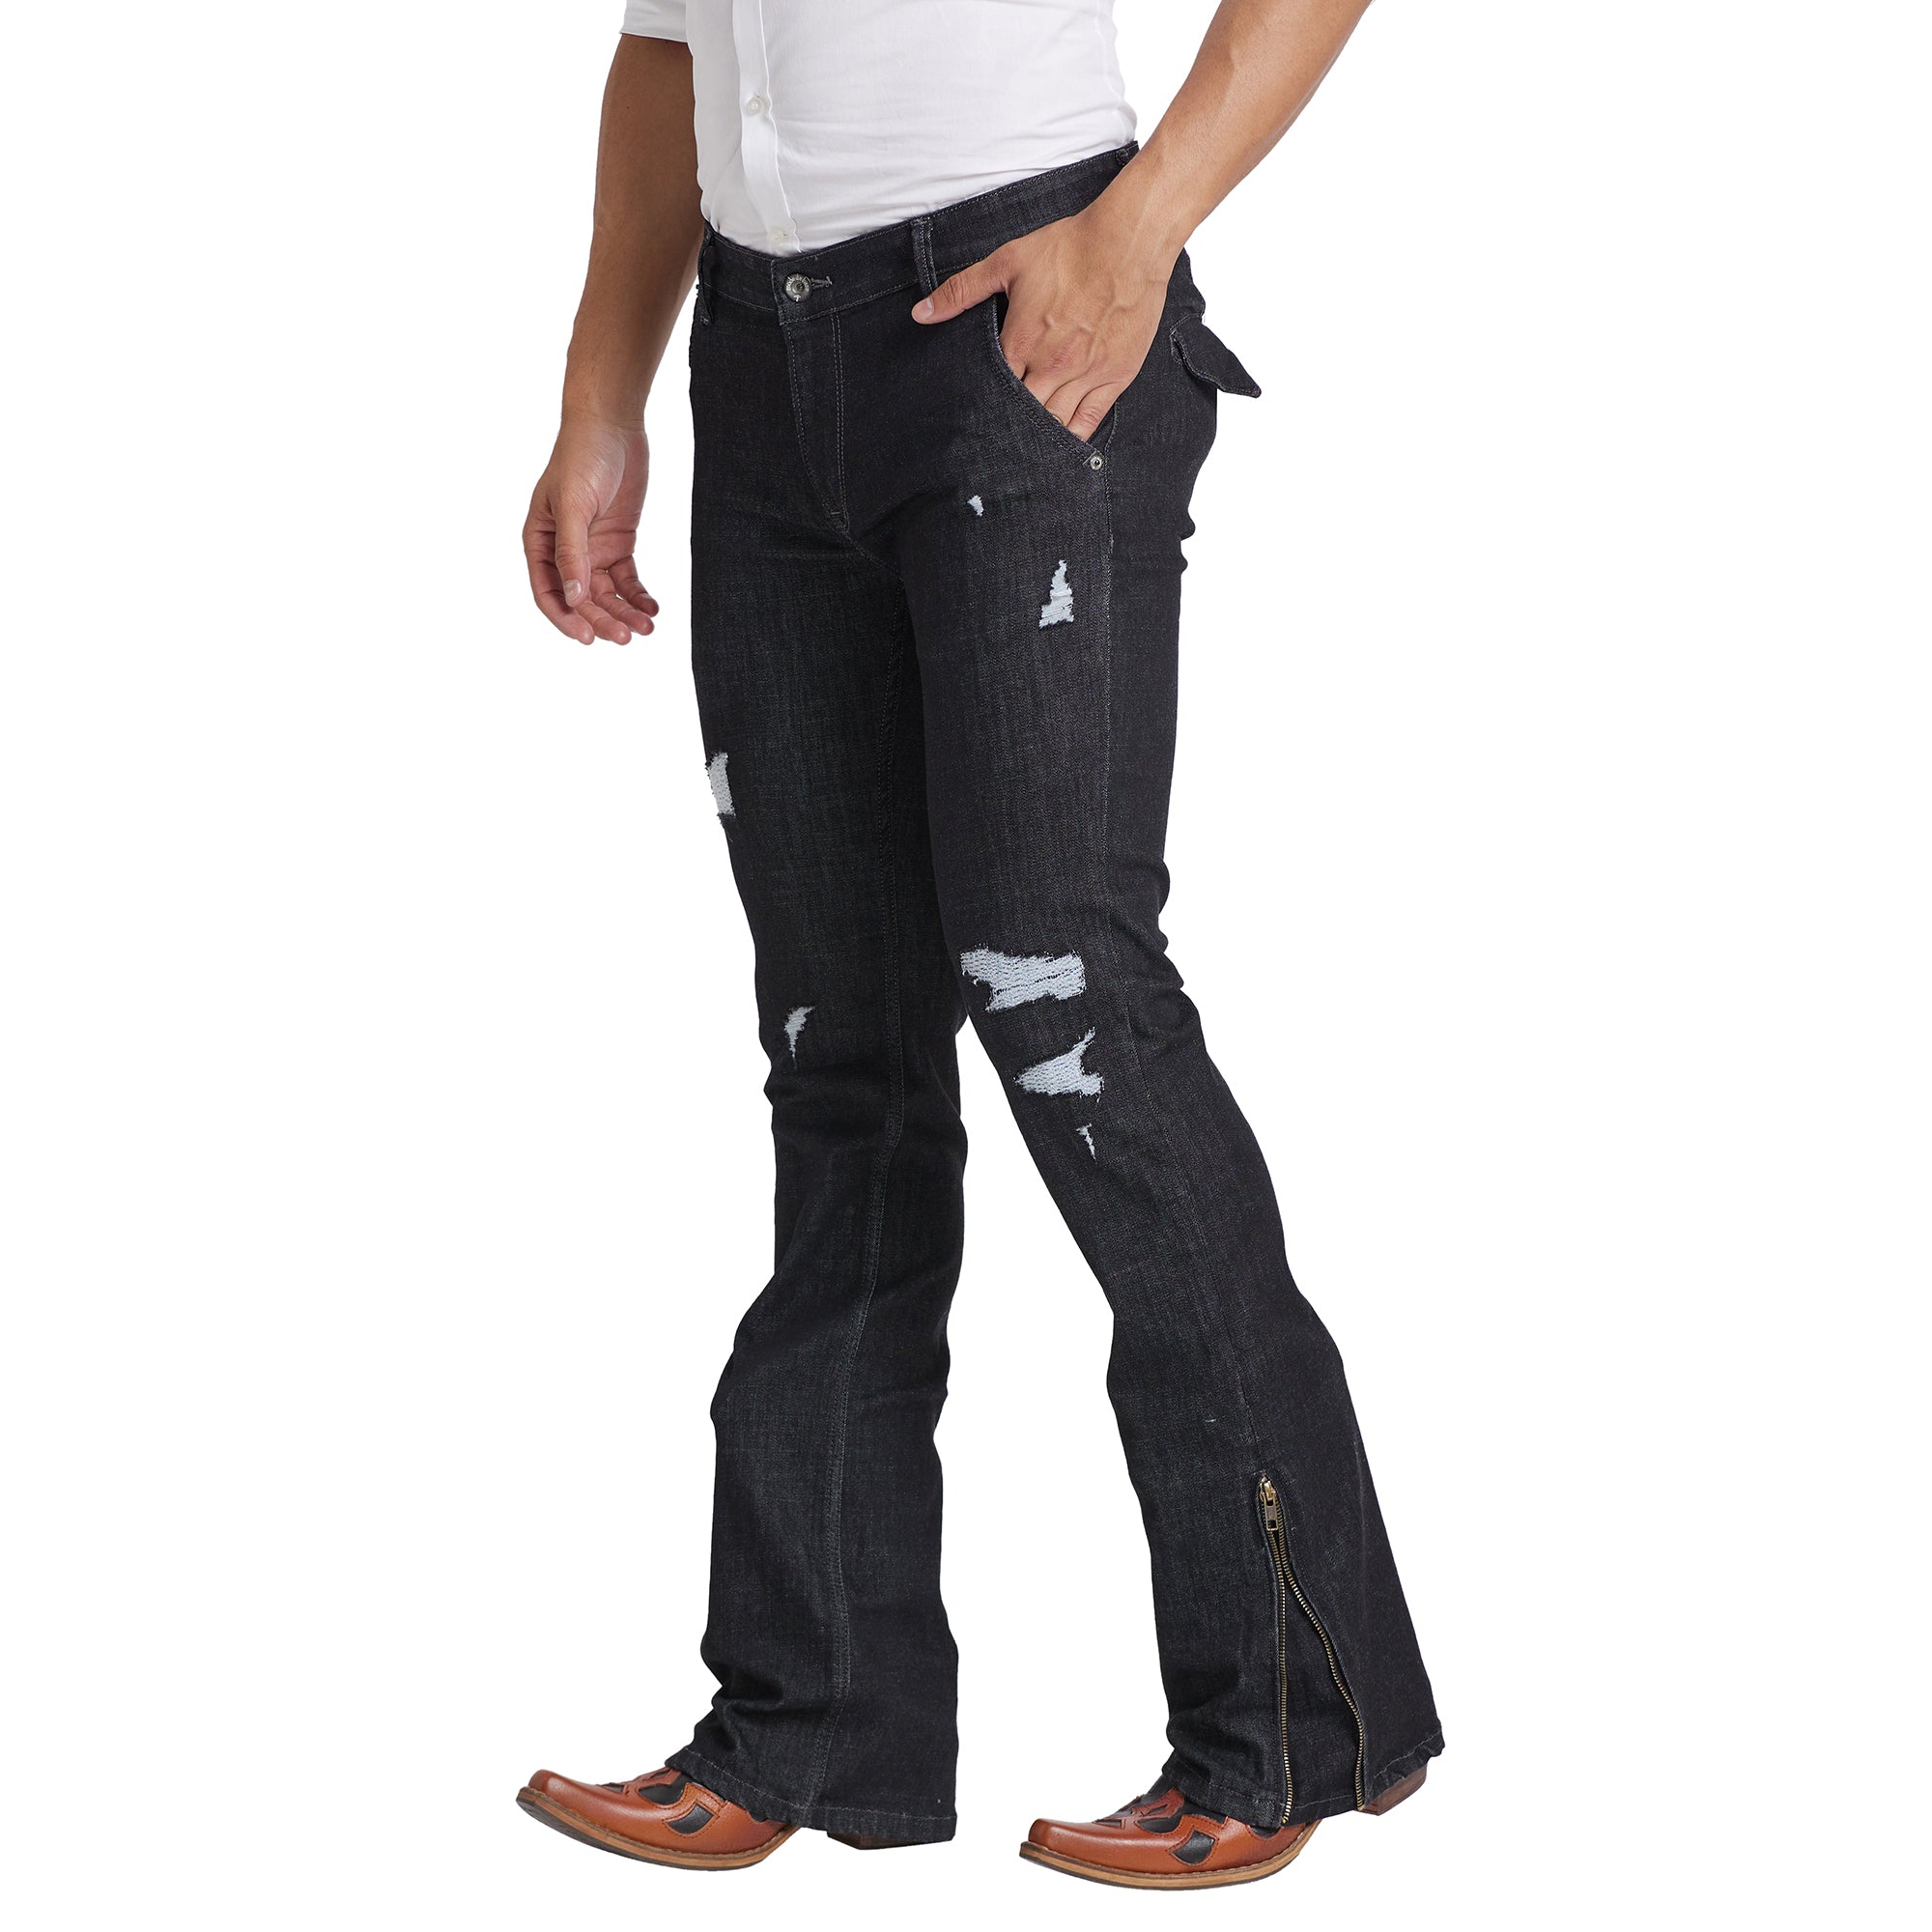 Carbon | Pants | 525 Carbon Brand Black Joggers Zipper Hems Size Large |  Poshmark